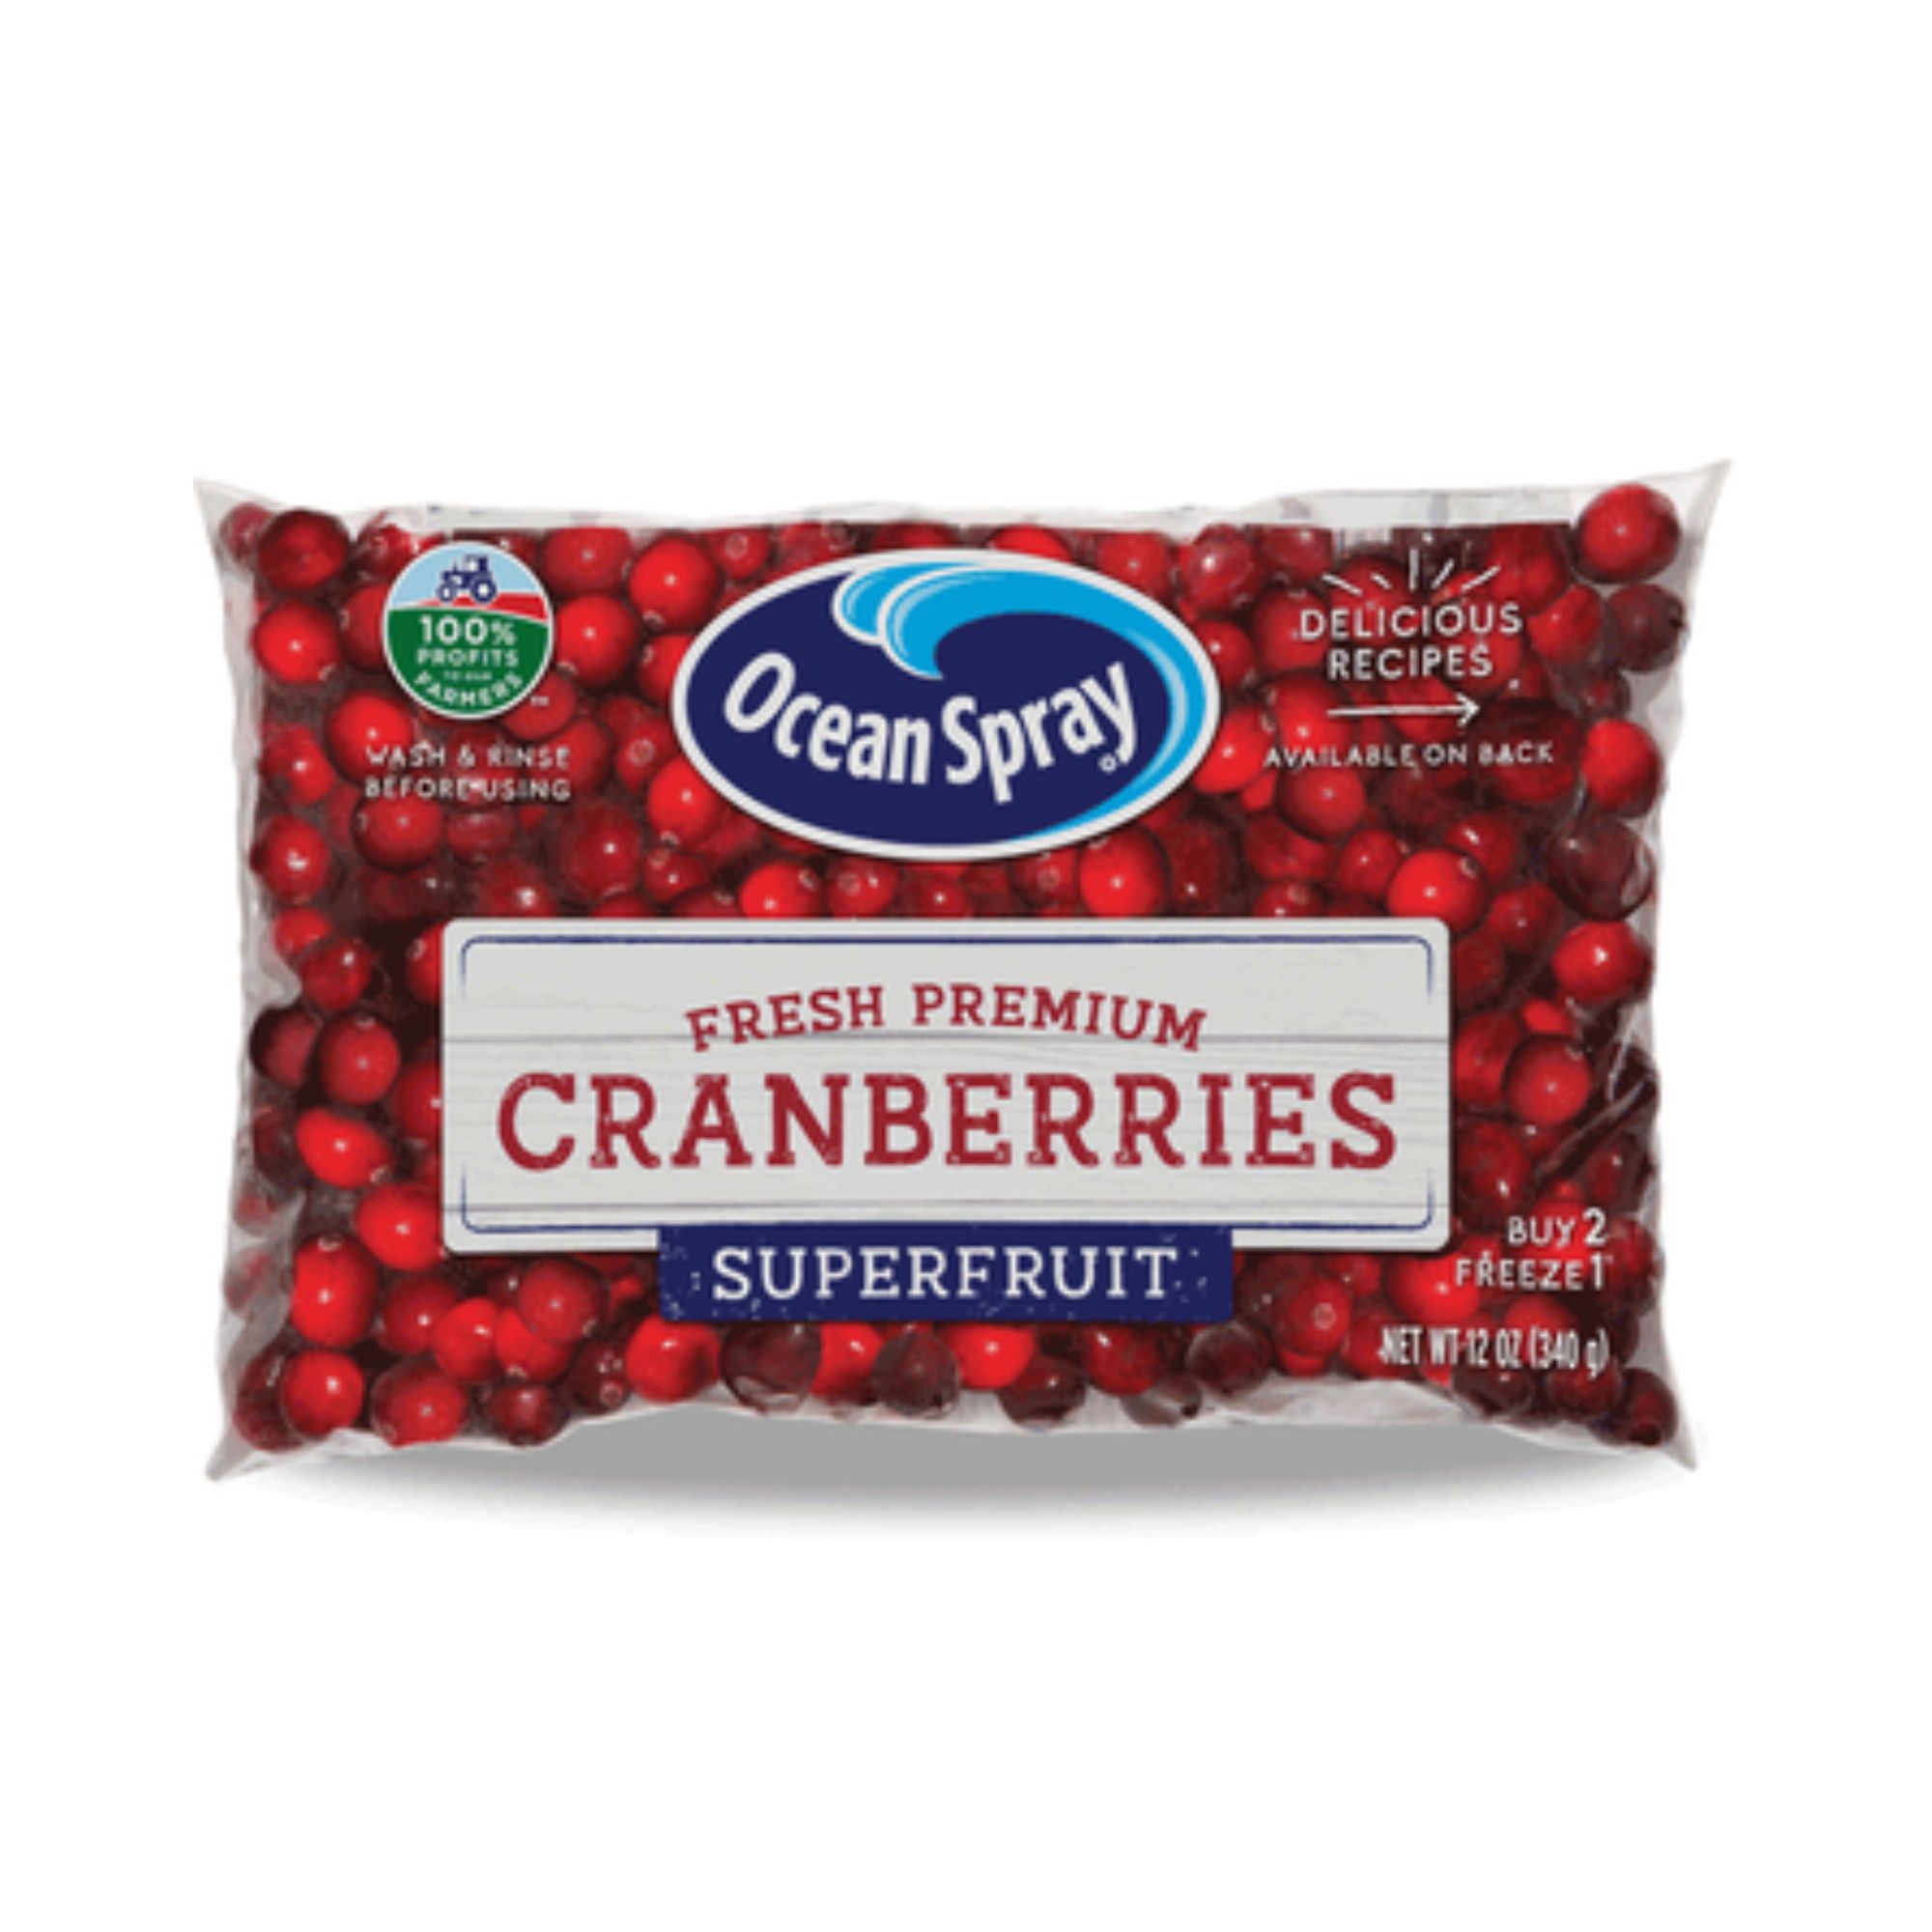 Ocean Spray Fresh Premium Cranberries